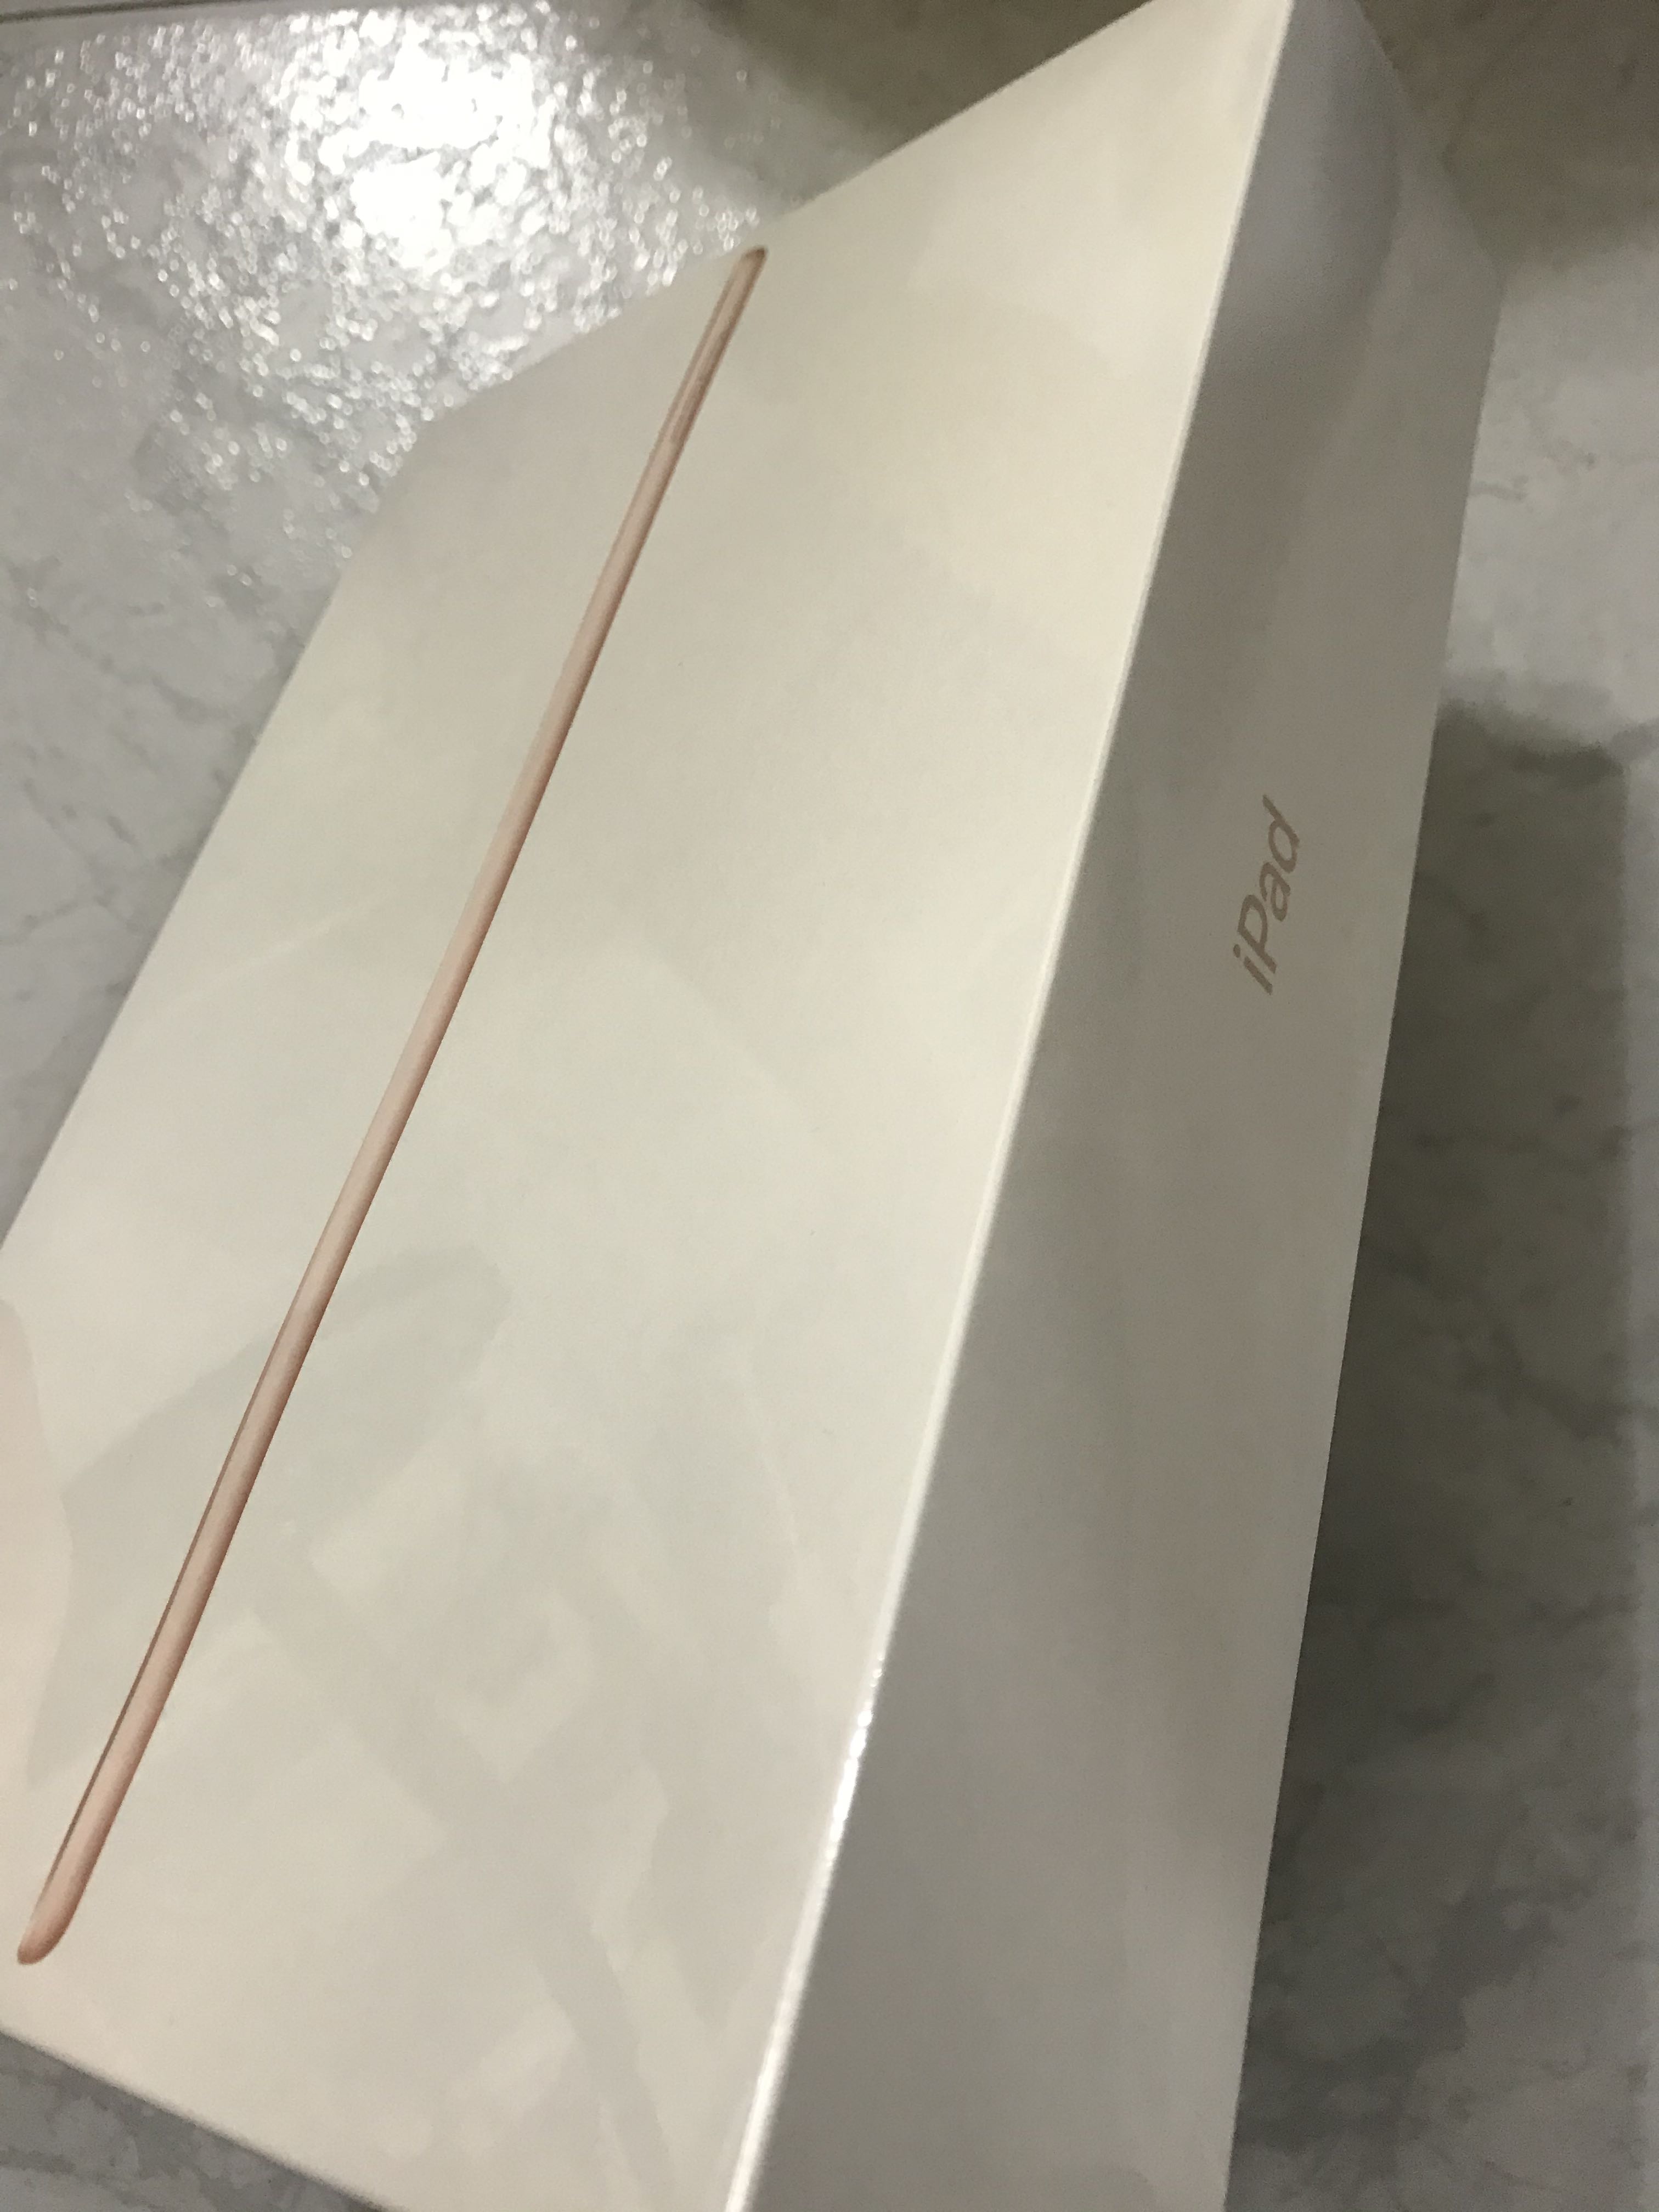 [Brand New] Apple iPad 10.2 inch WiFi (7th Generation)